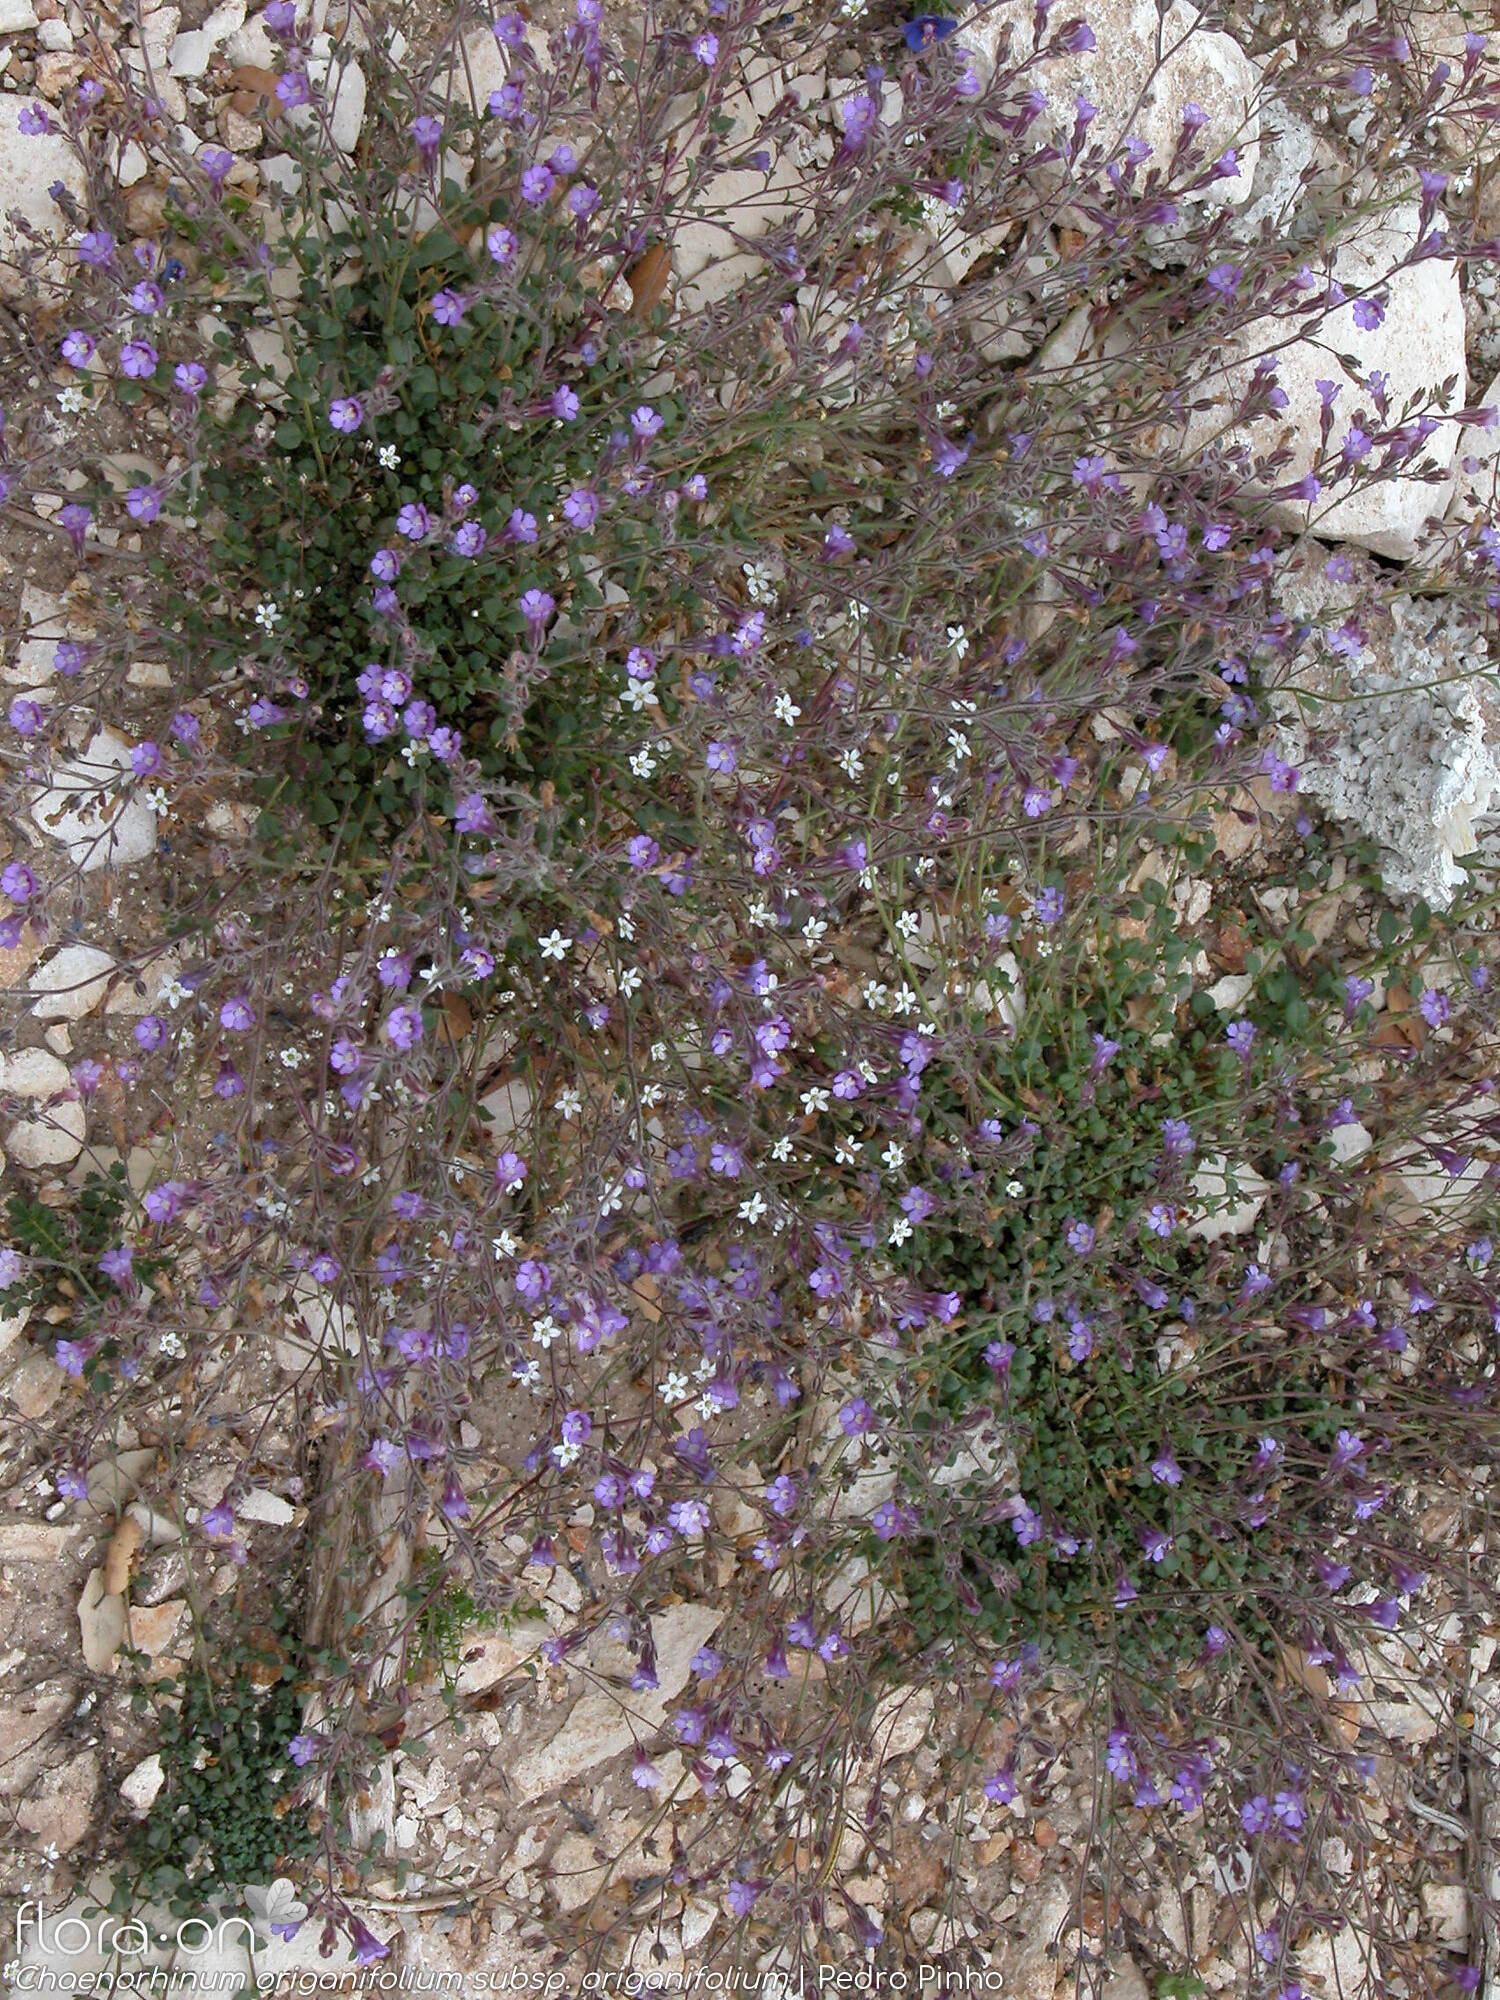 Chaenorhinum origanifolium origanifolium - Hábito | Pedro Pinho; CC BY-NC 4.0